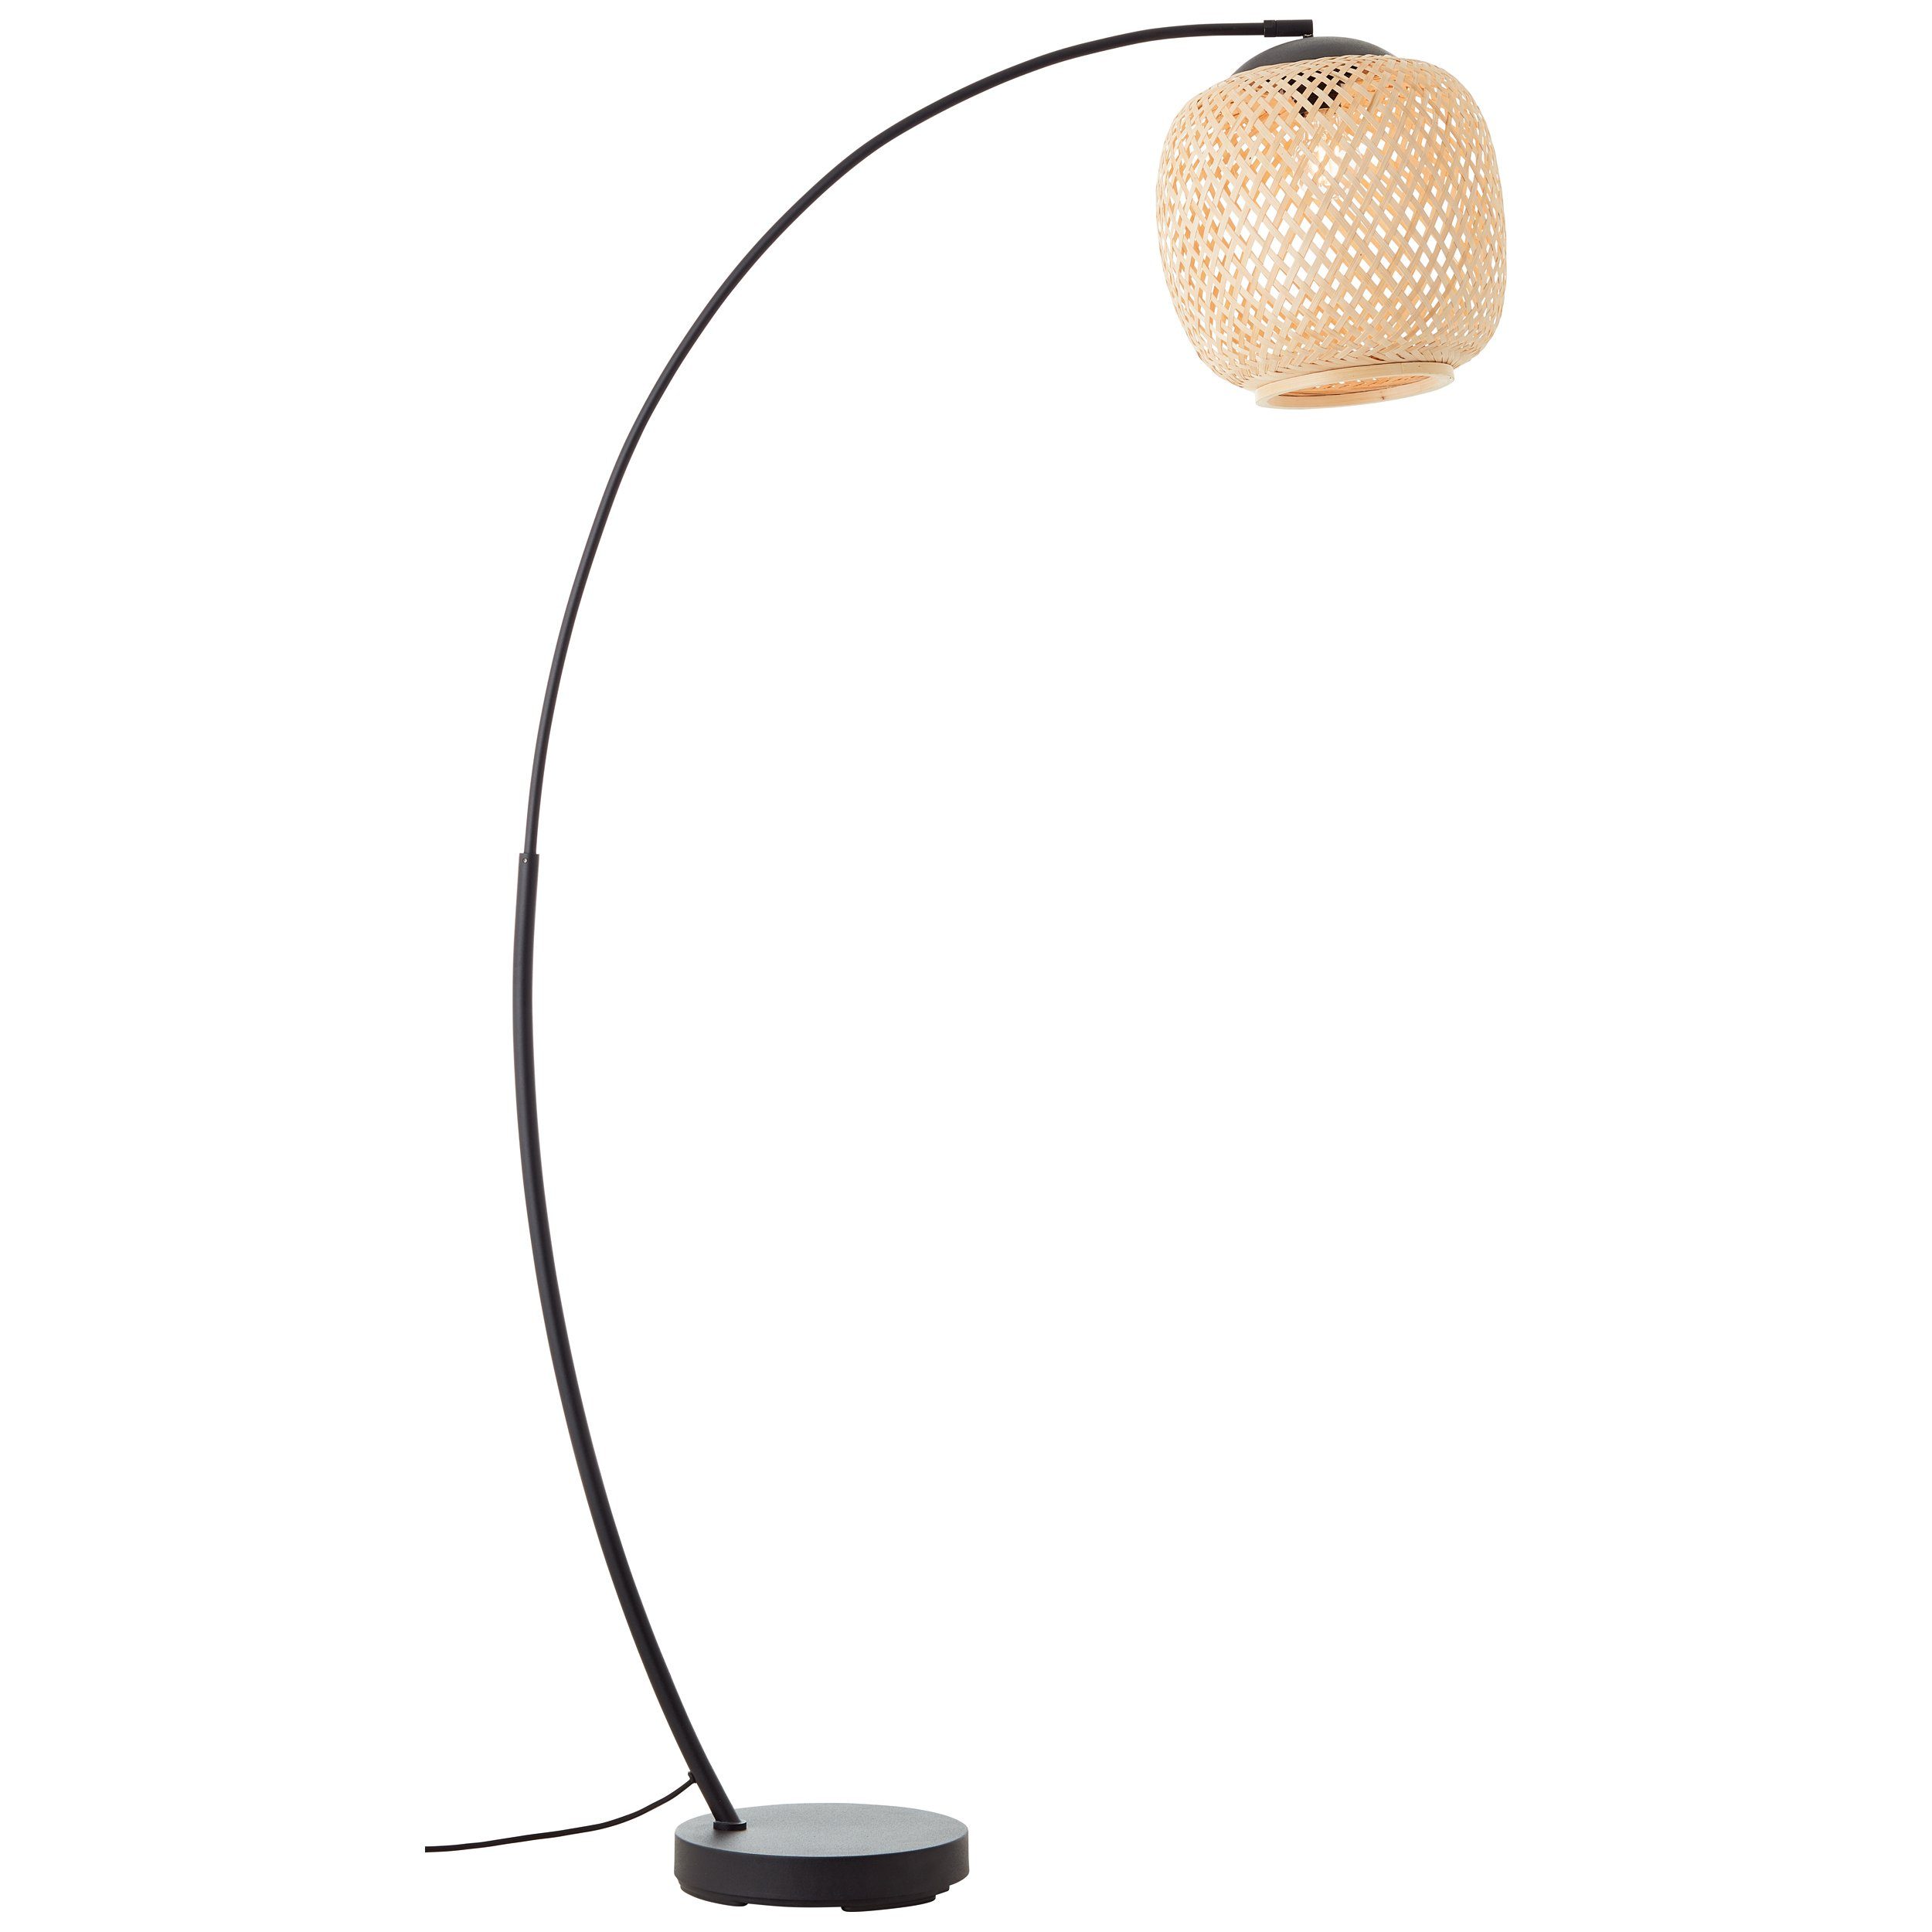 Brilliant Stehlampe Mesa, Mesa Standleuchte 1x Metall/Bambus, schwarz/rattan, E27 A60, 1-flammig